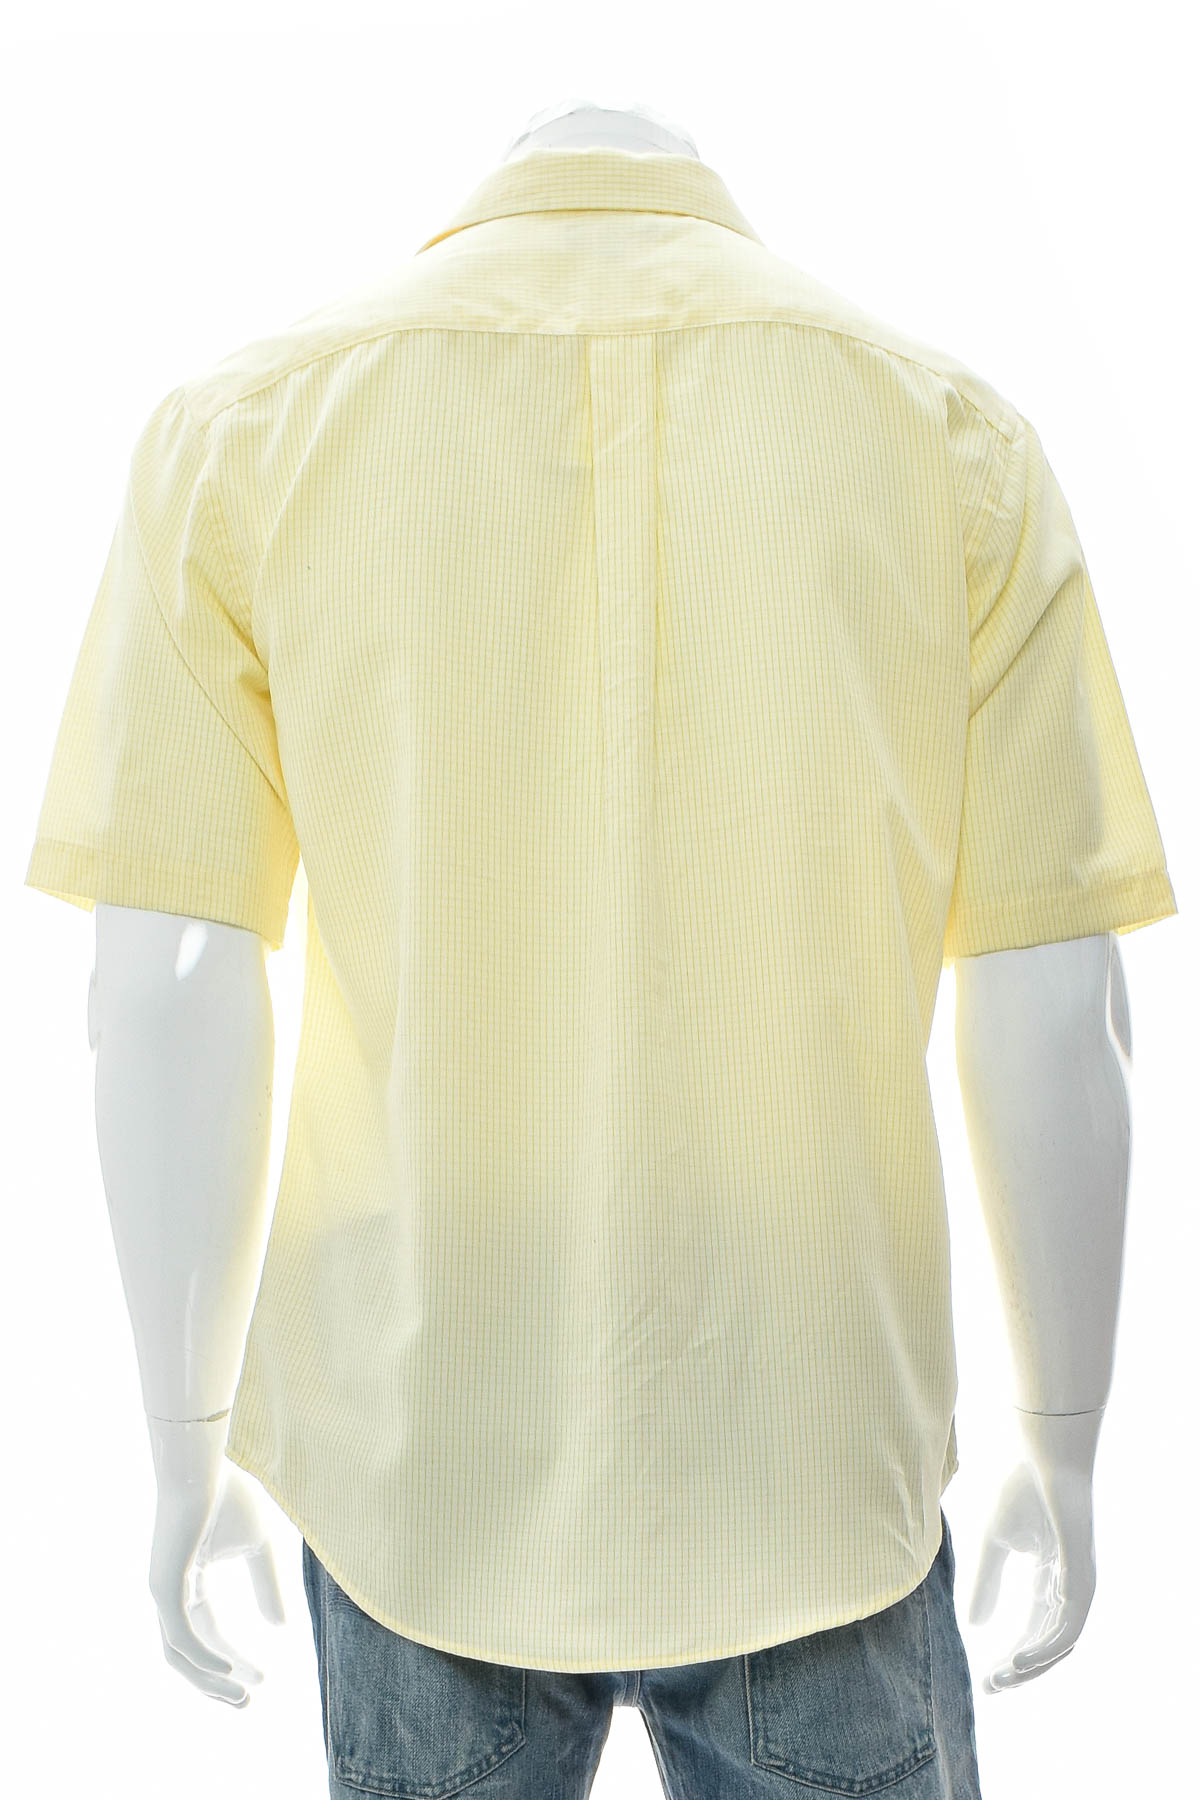 Men's shirt - Croft & Barrow - 1